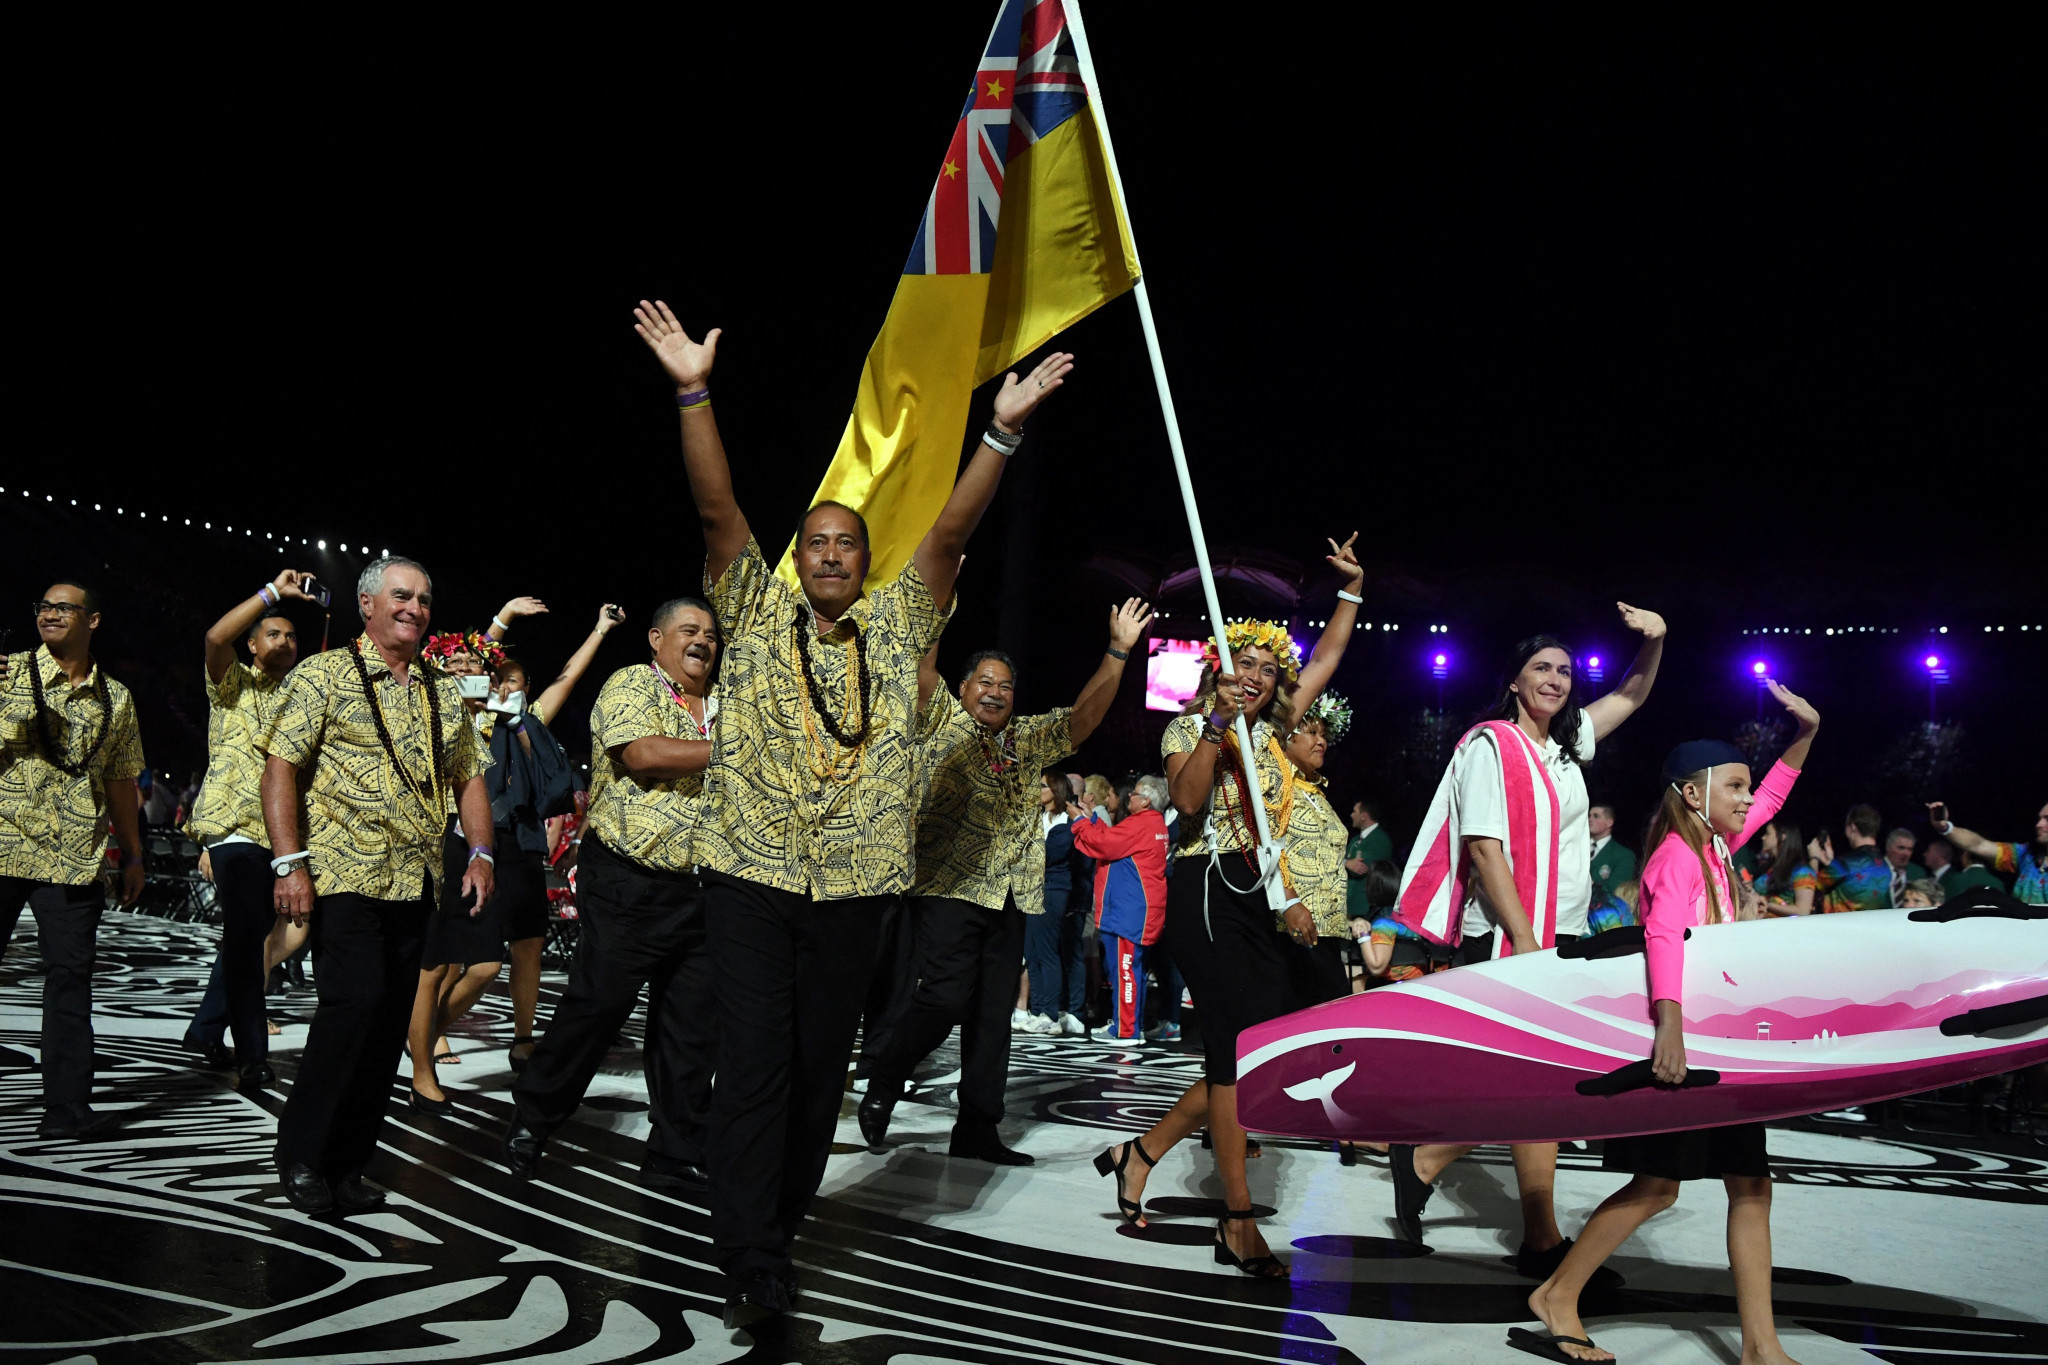 Leader of Niue named in island's team for Birmingham 2022